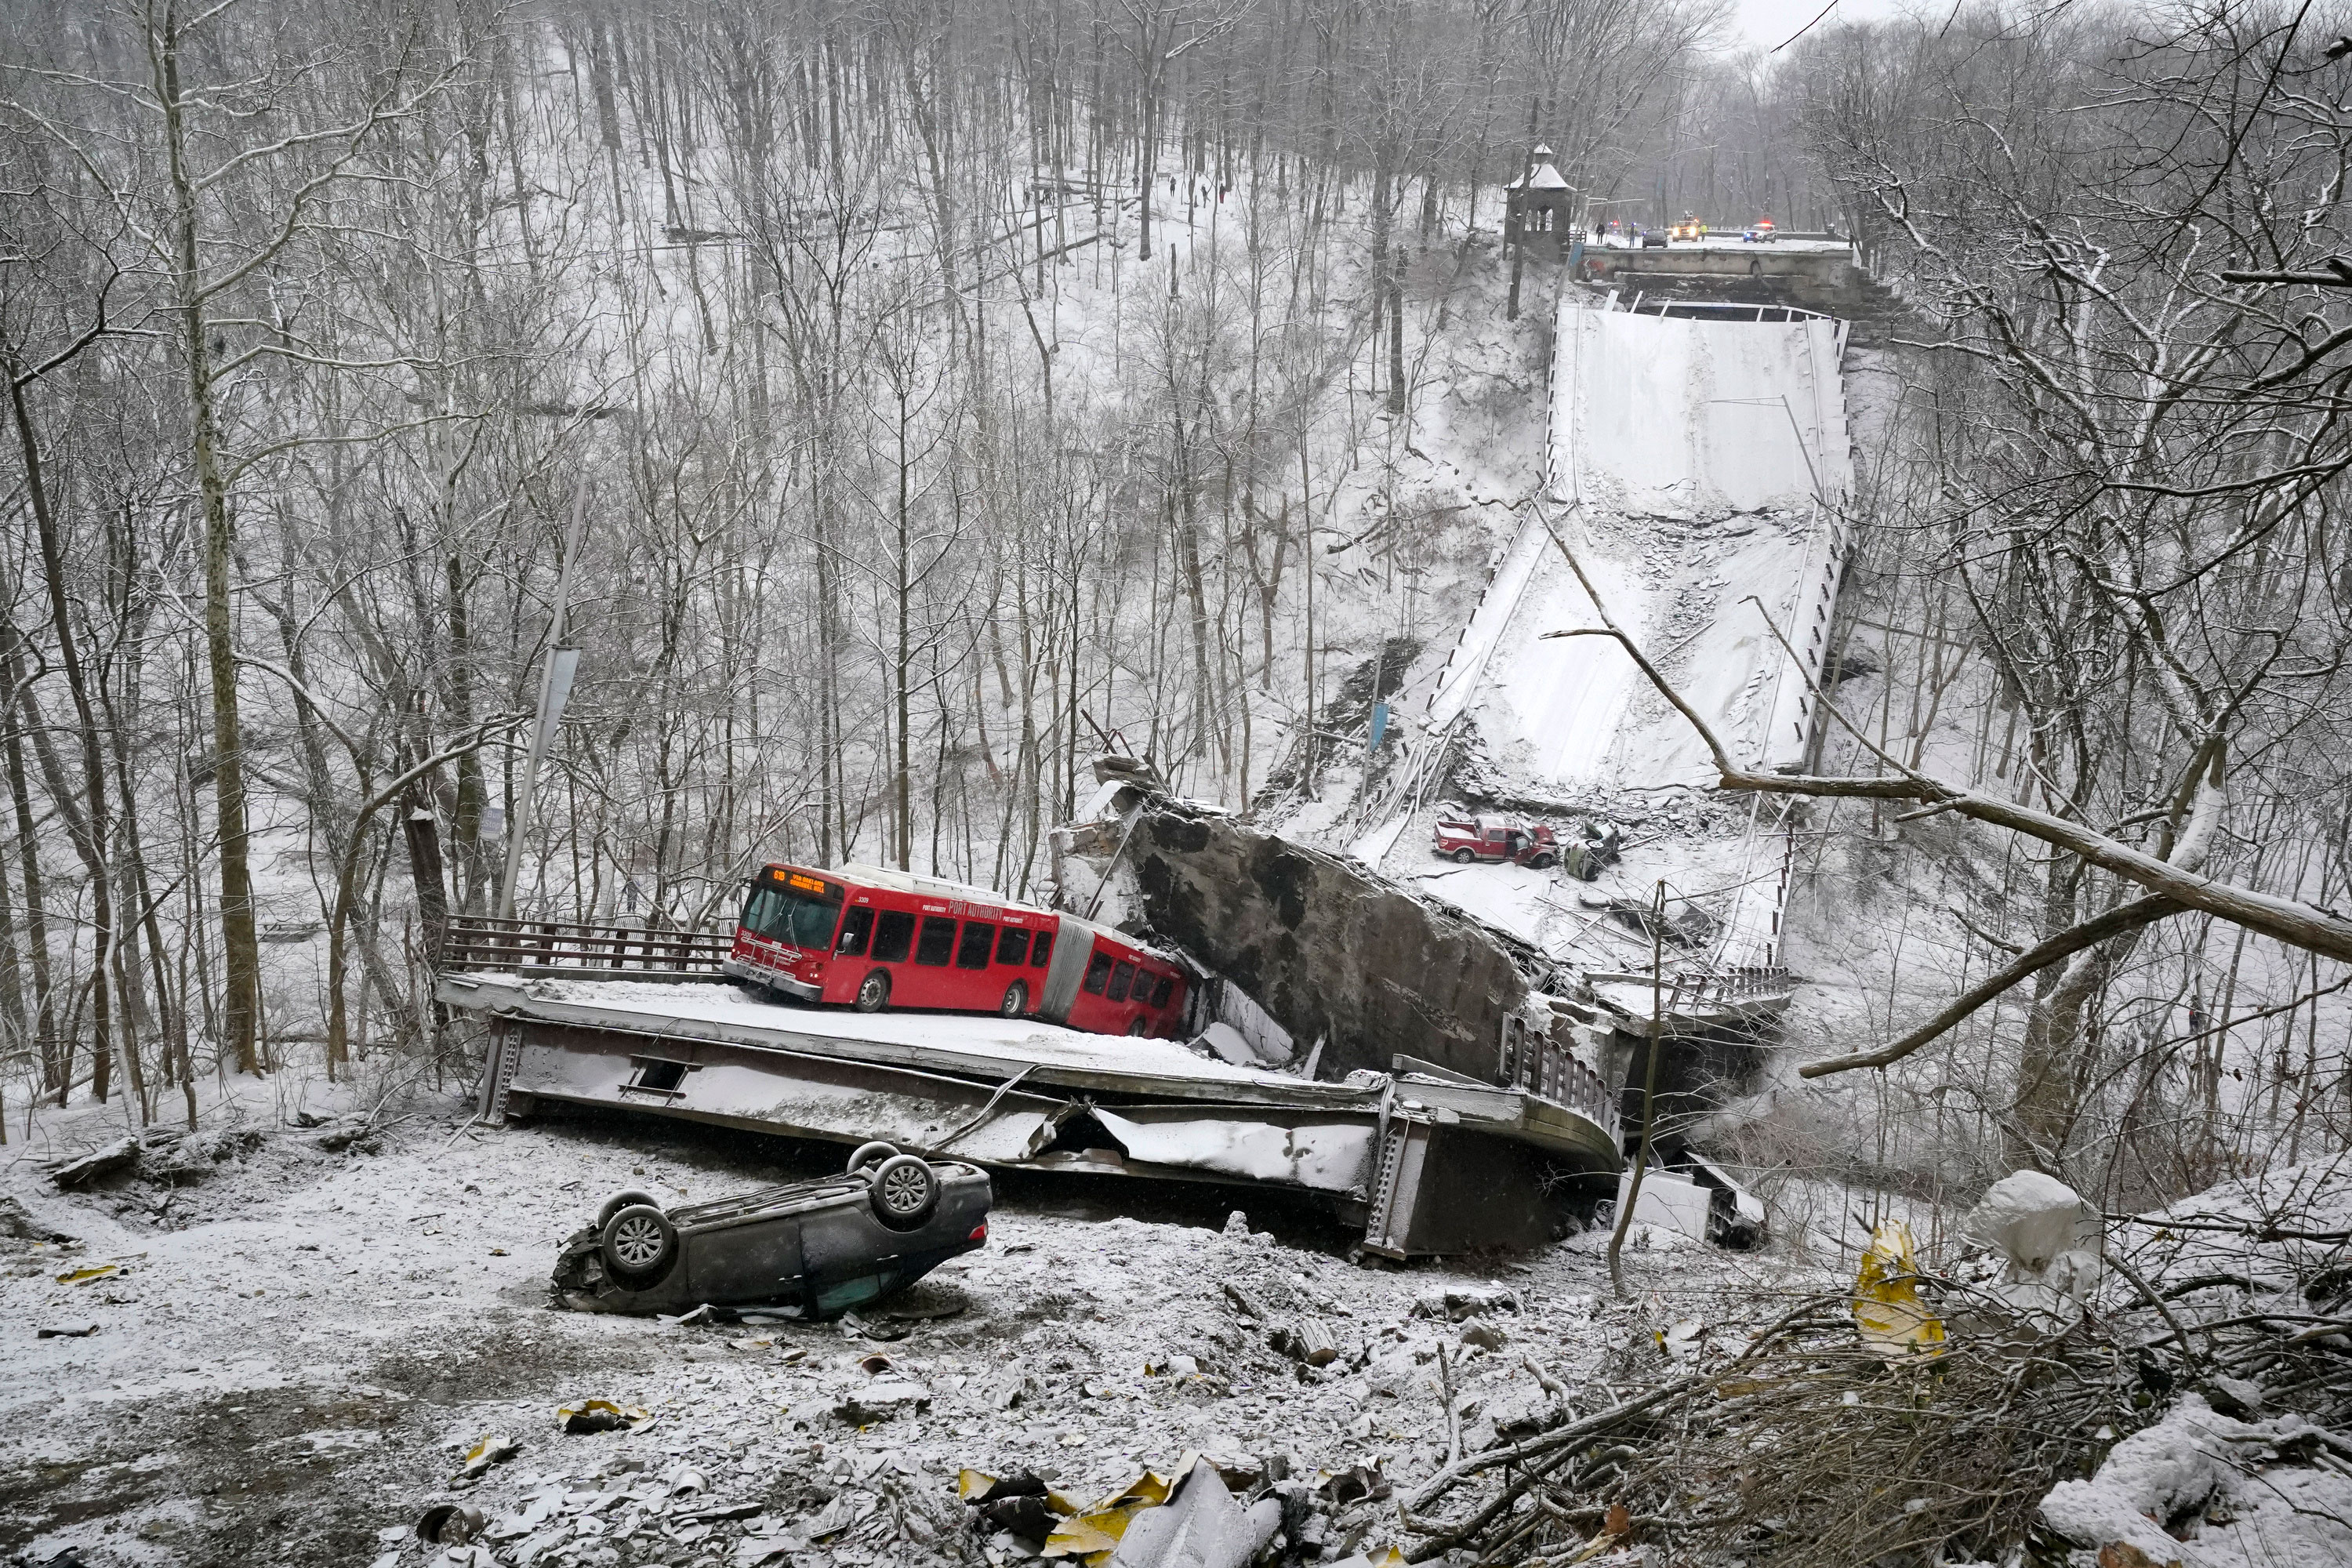 Pittsburgh bridge collapses ahead of Biden city visit to talk infrastructure